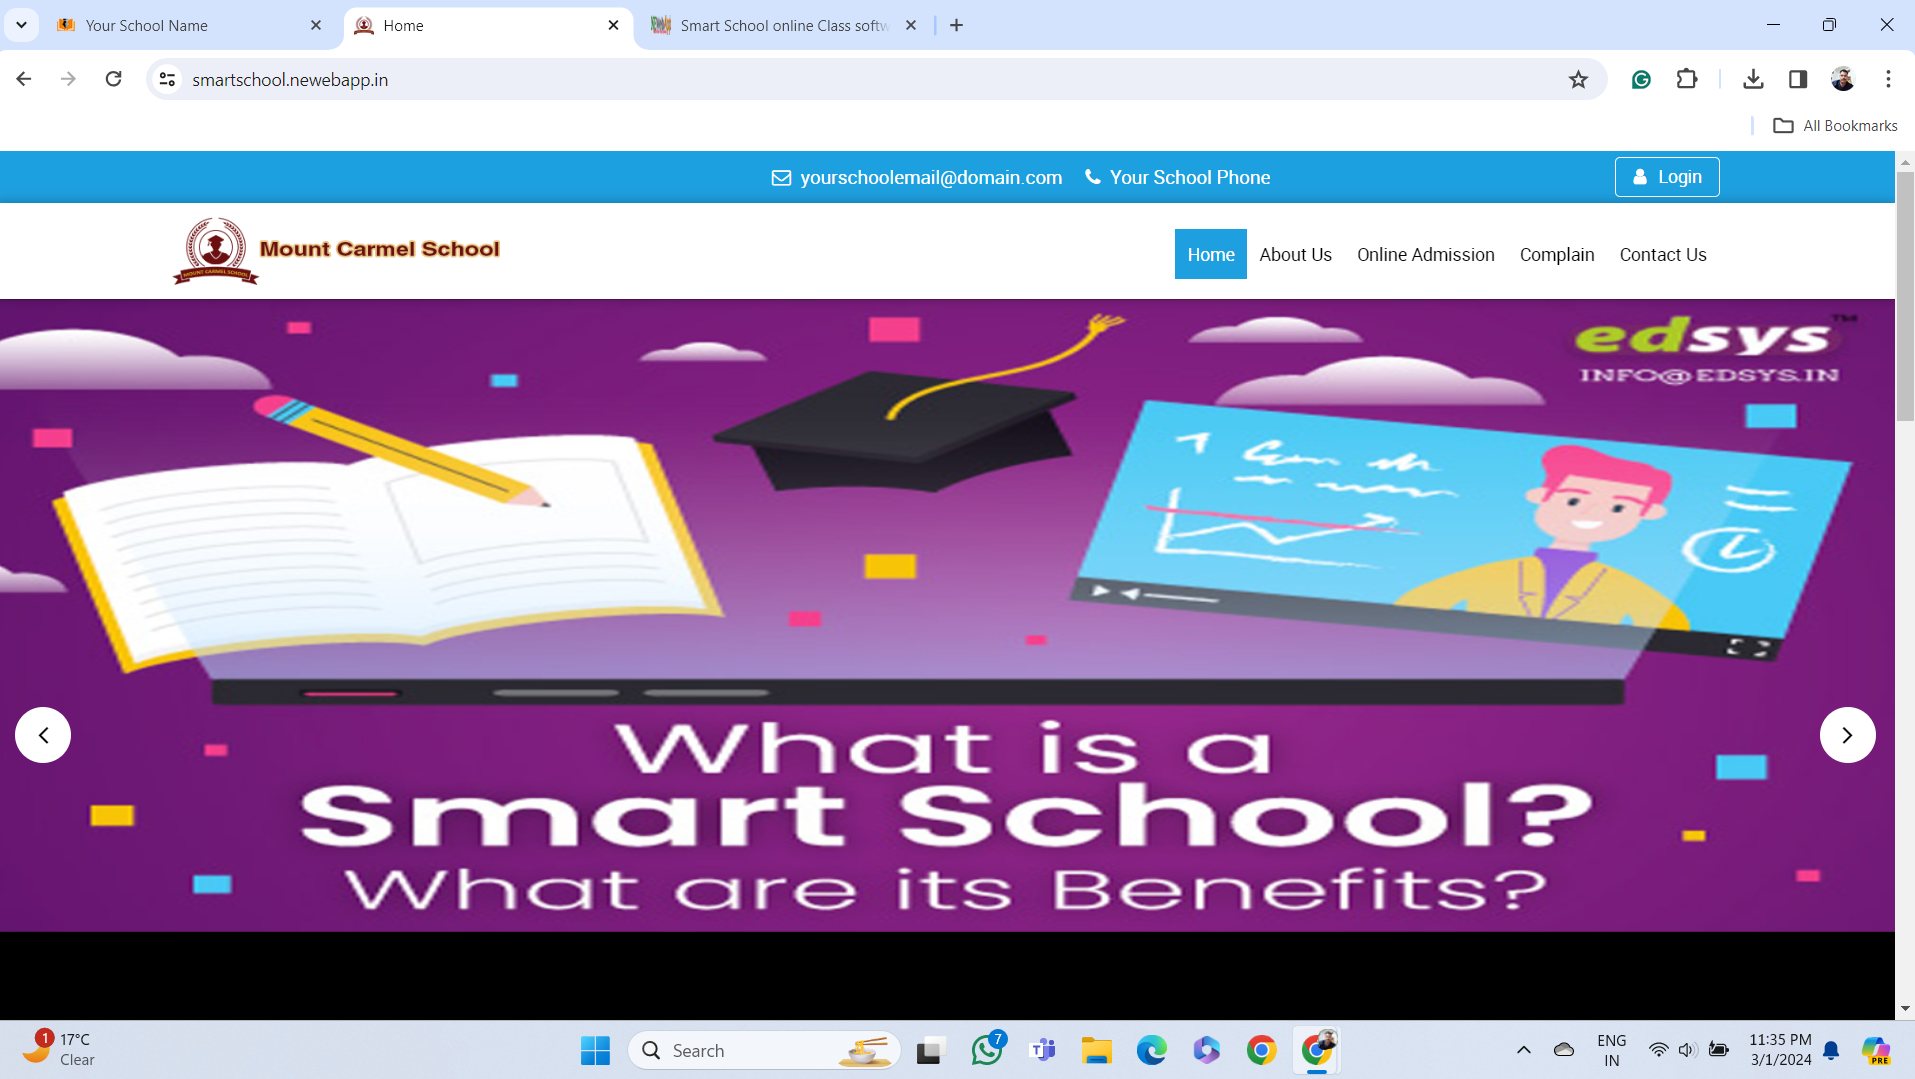 Smart School online management system software and website